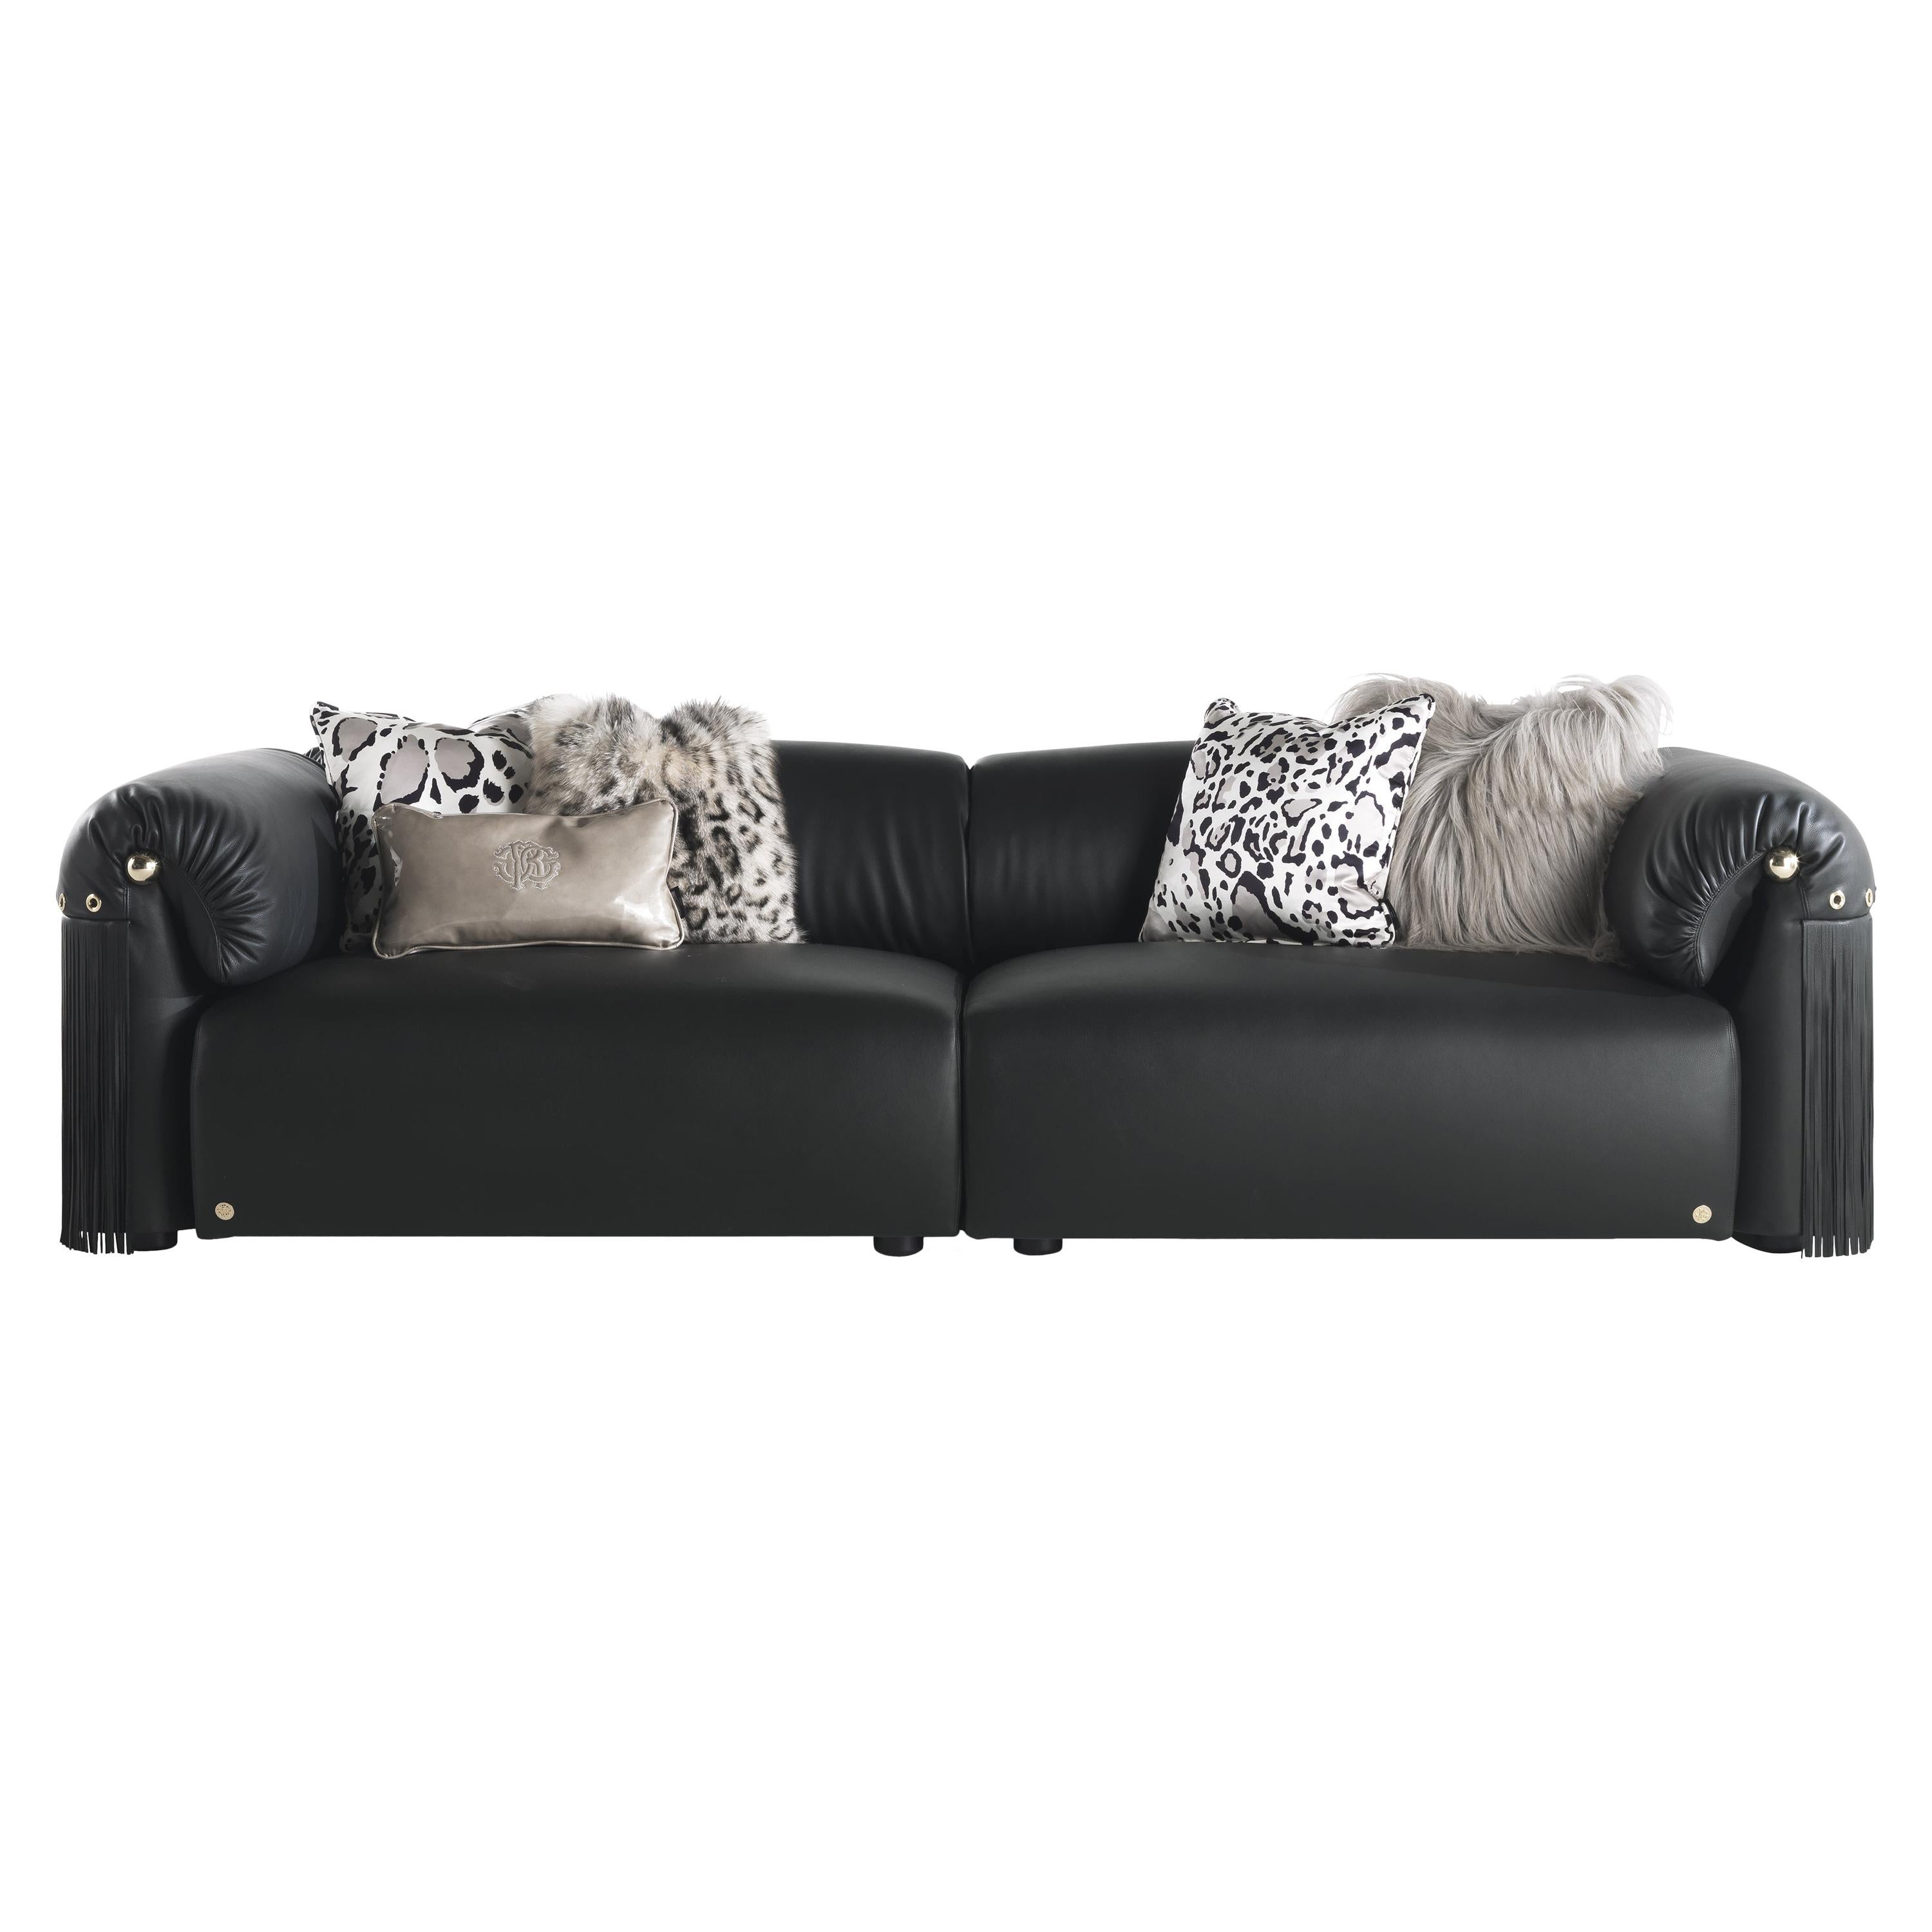  Roberto Cavalli Home Interiors Malawi Modular Sofa in Black Leather 